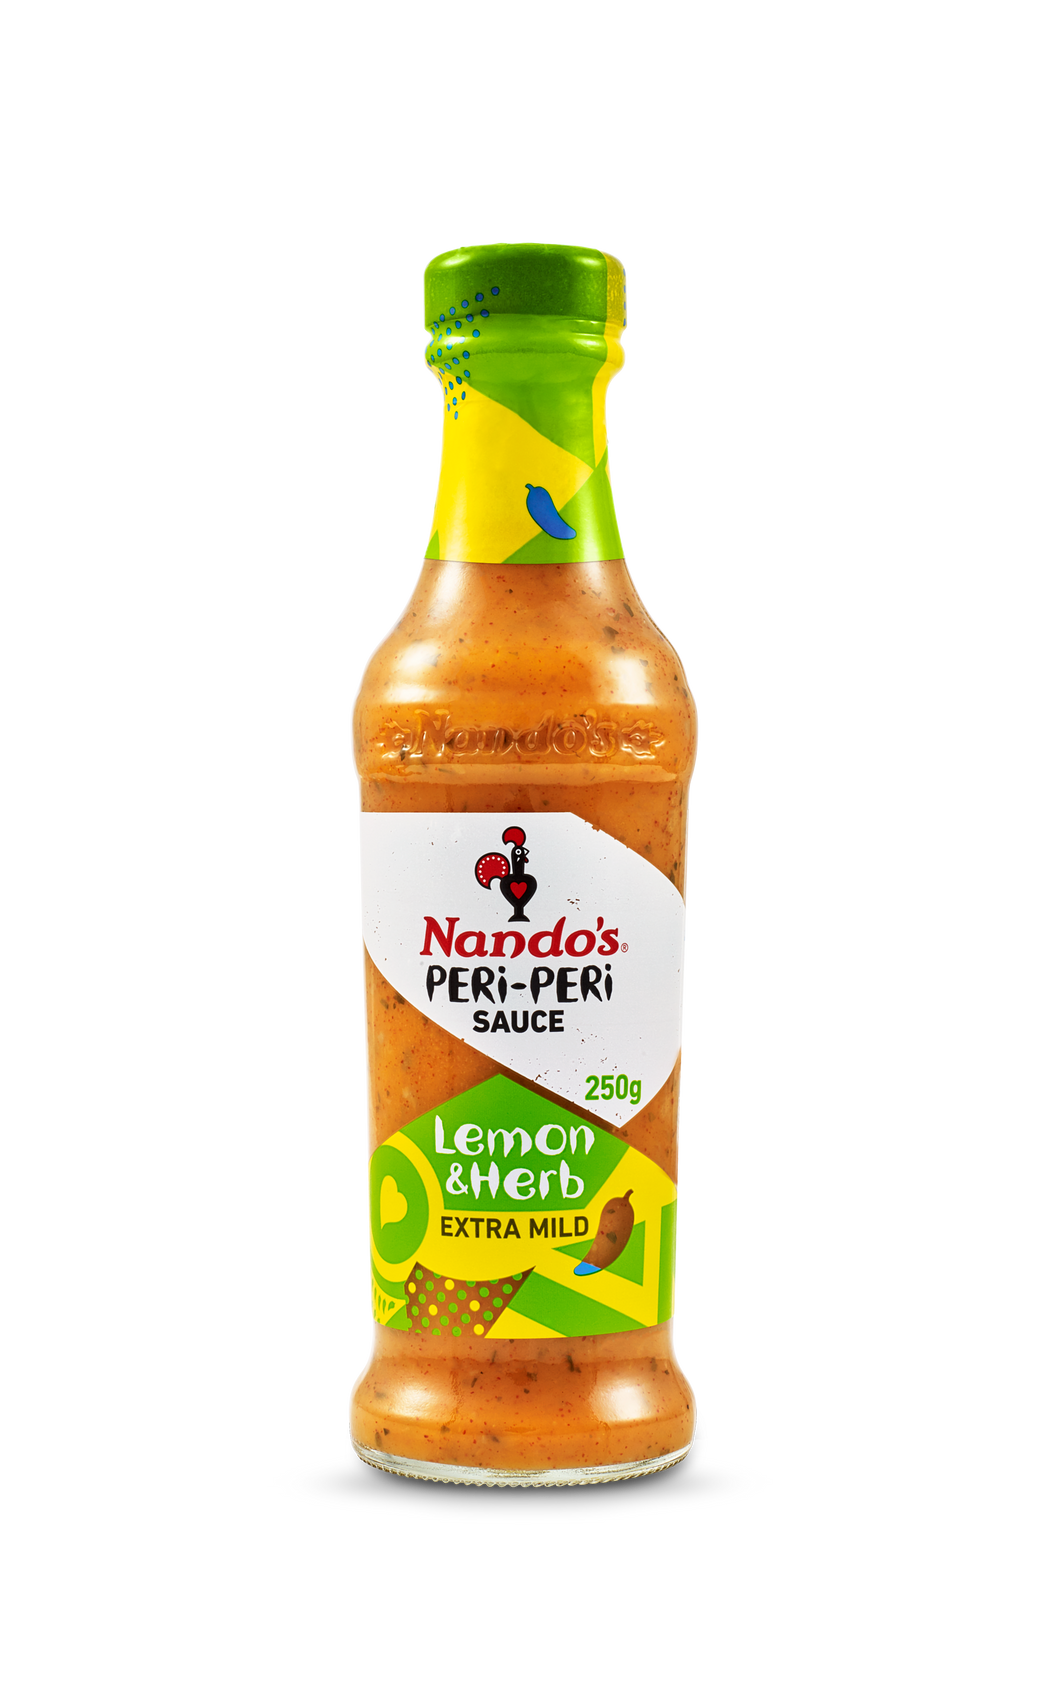 Nando's Peri-Peri Lemon & Herb Sauce 250gm